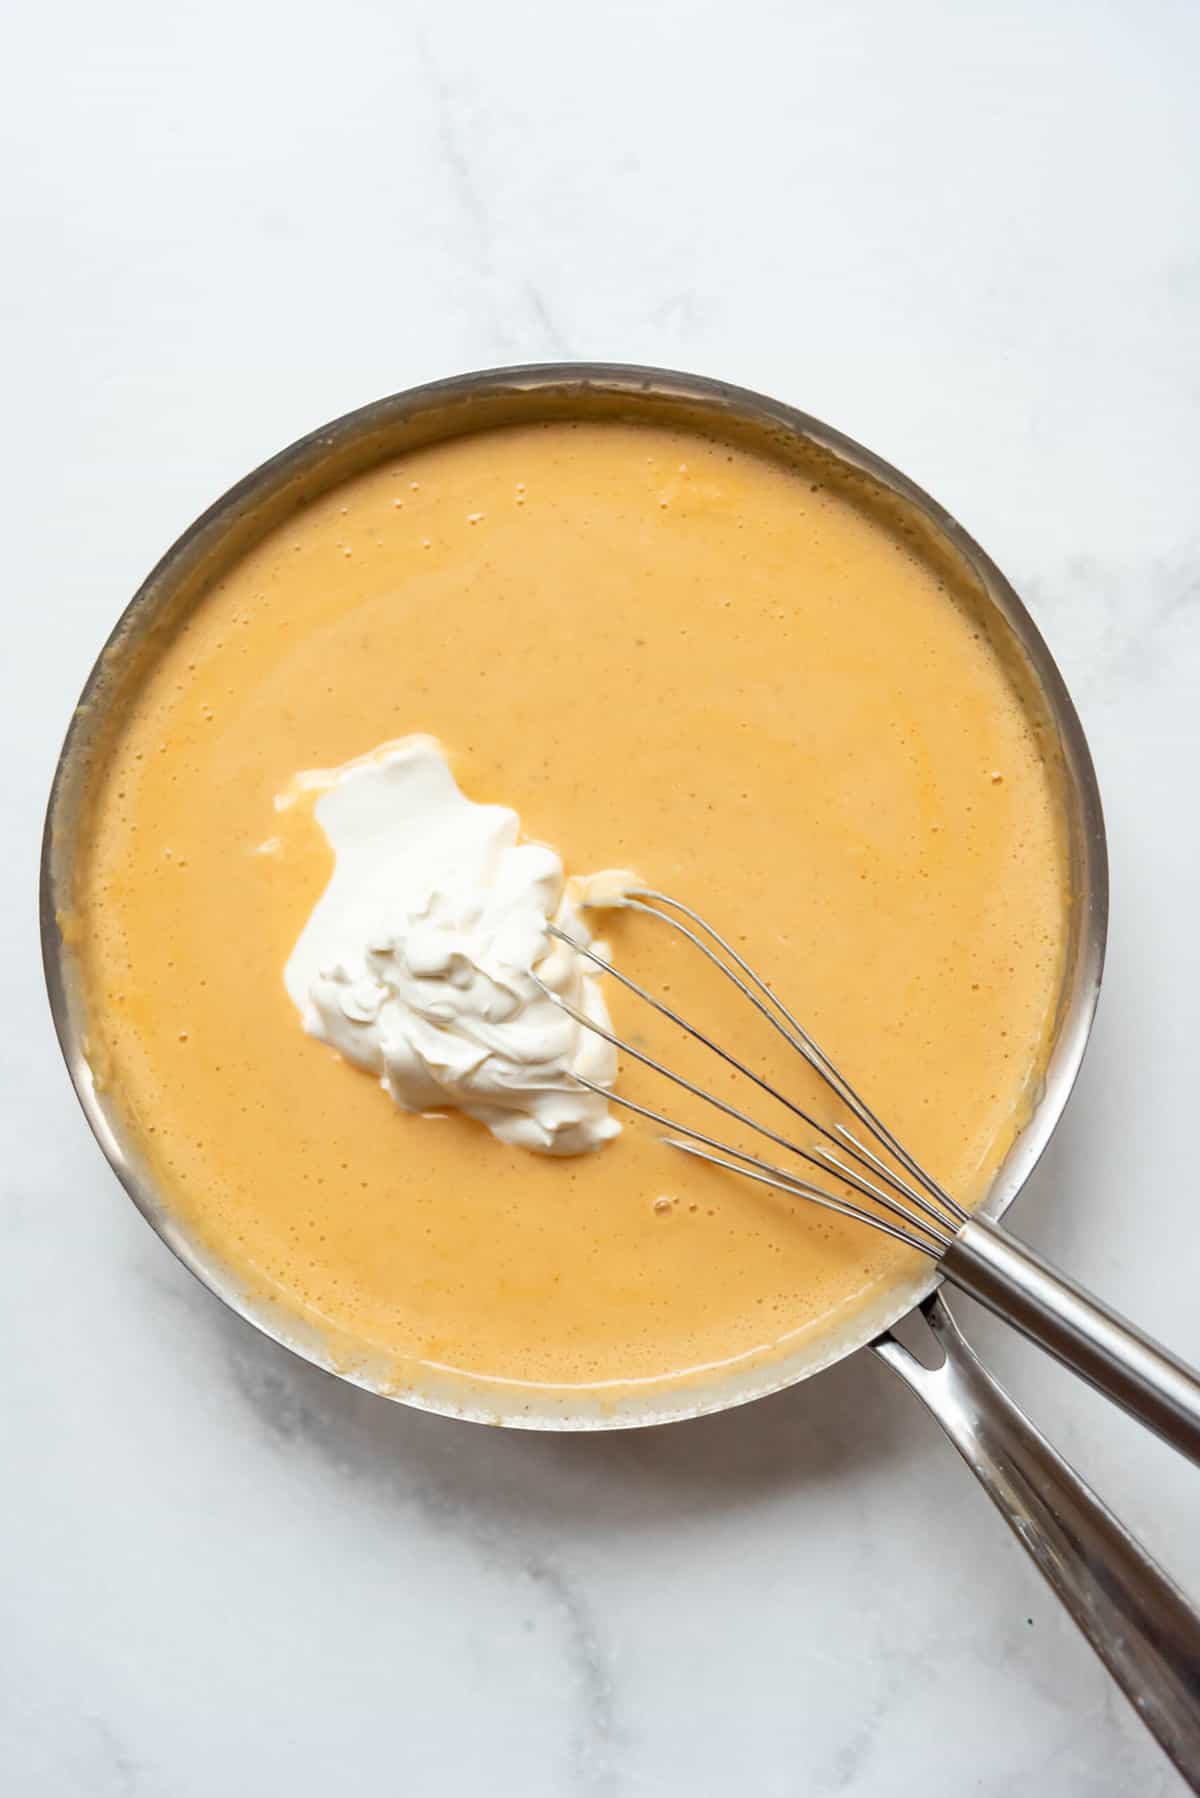 Adding sour cream to a cheesy sauce for a casserole dish.